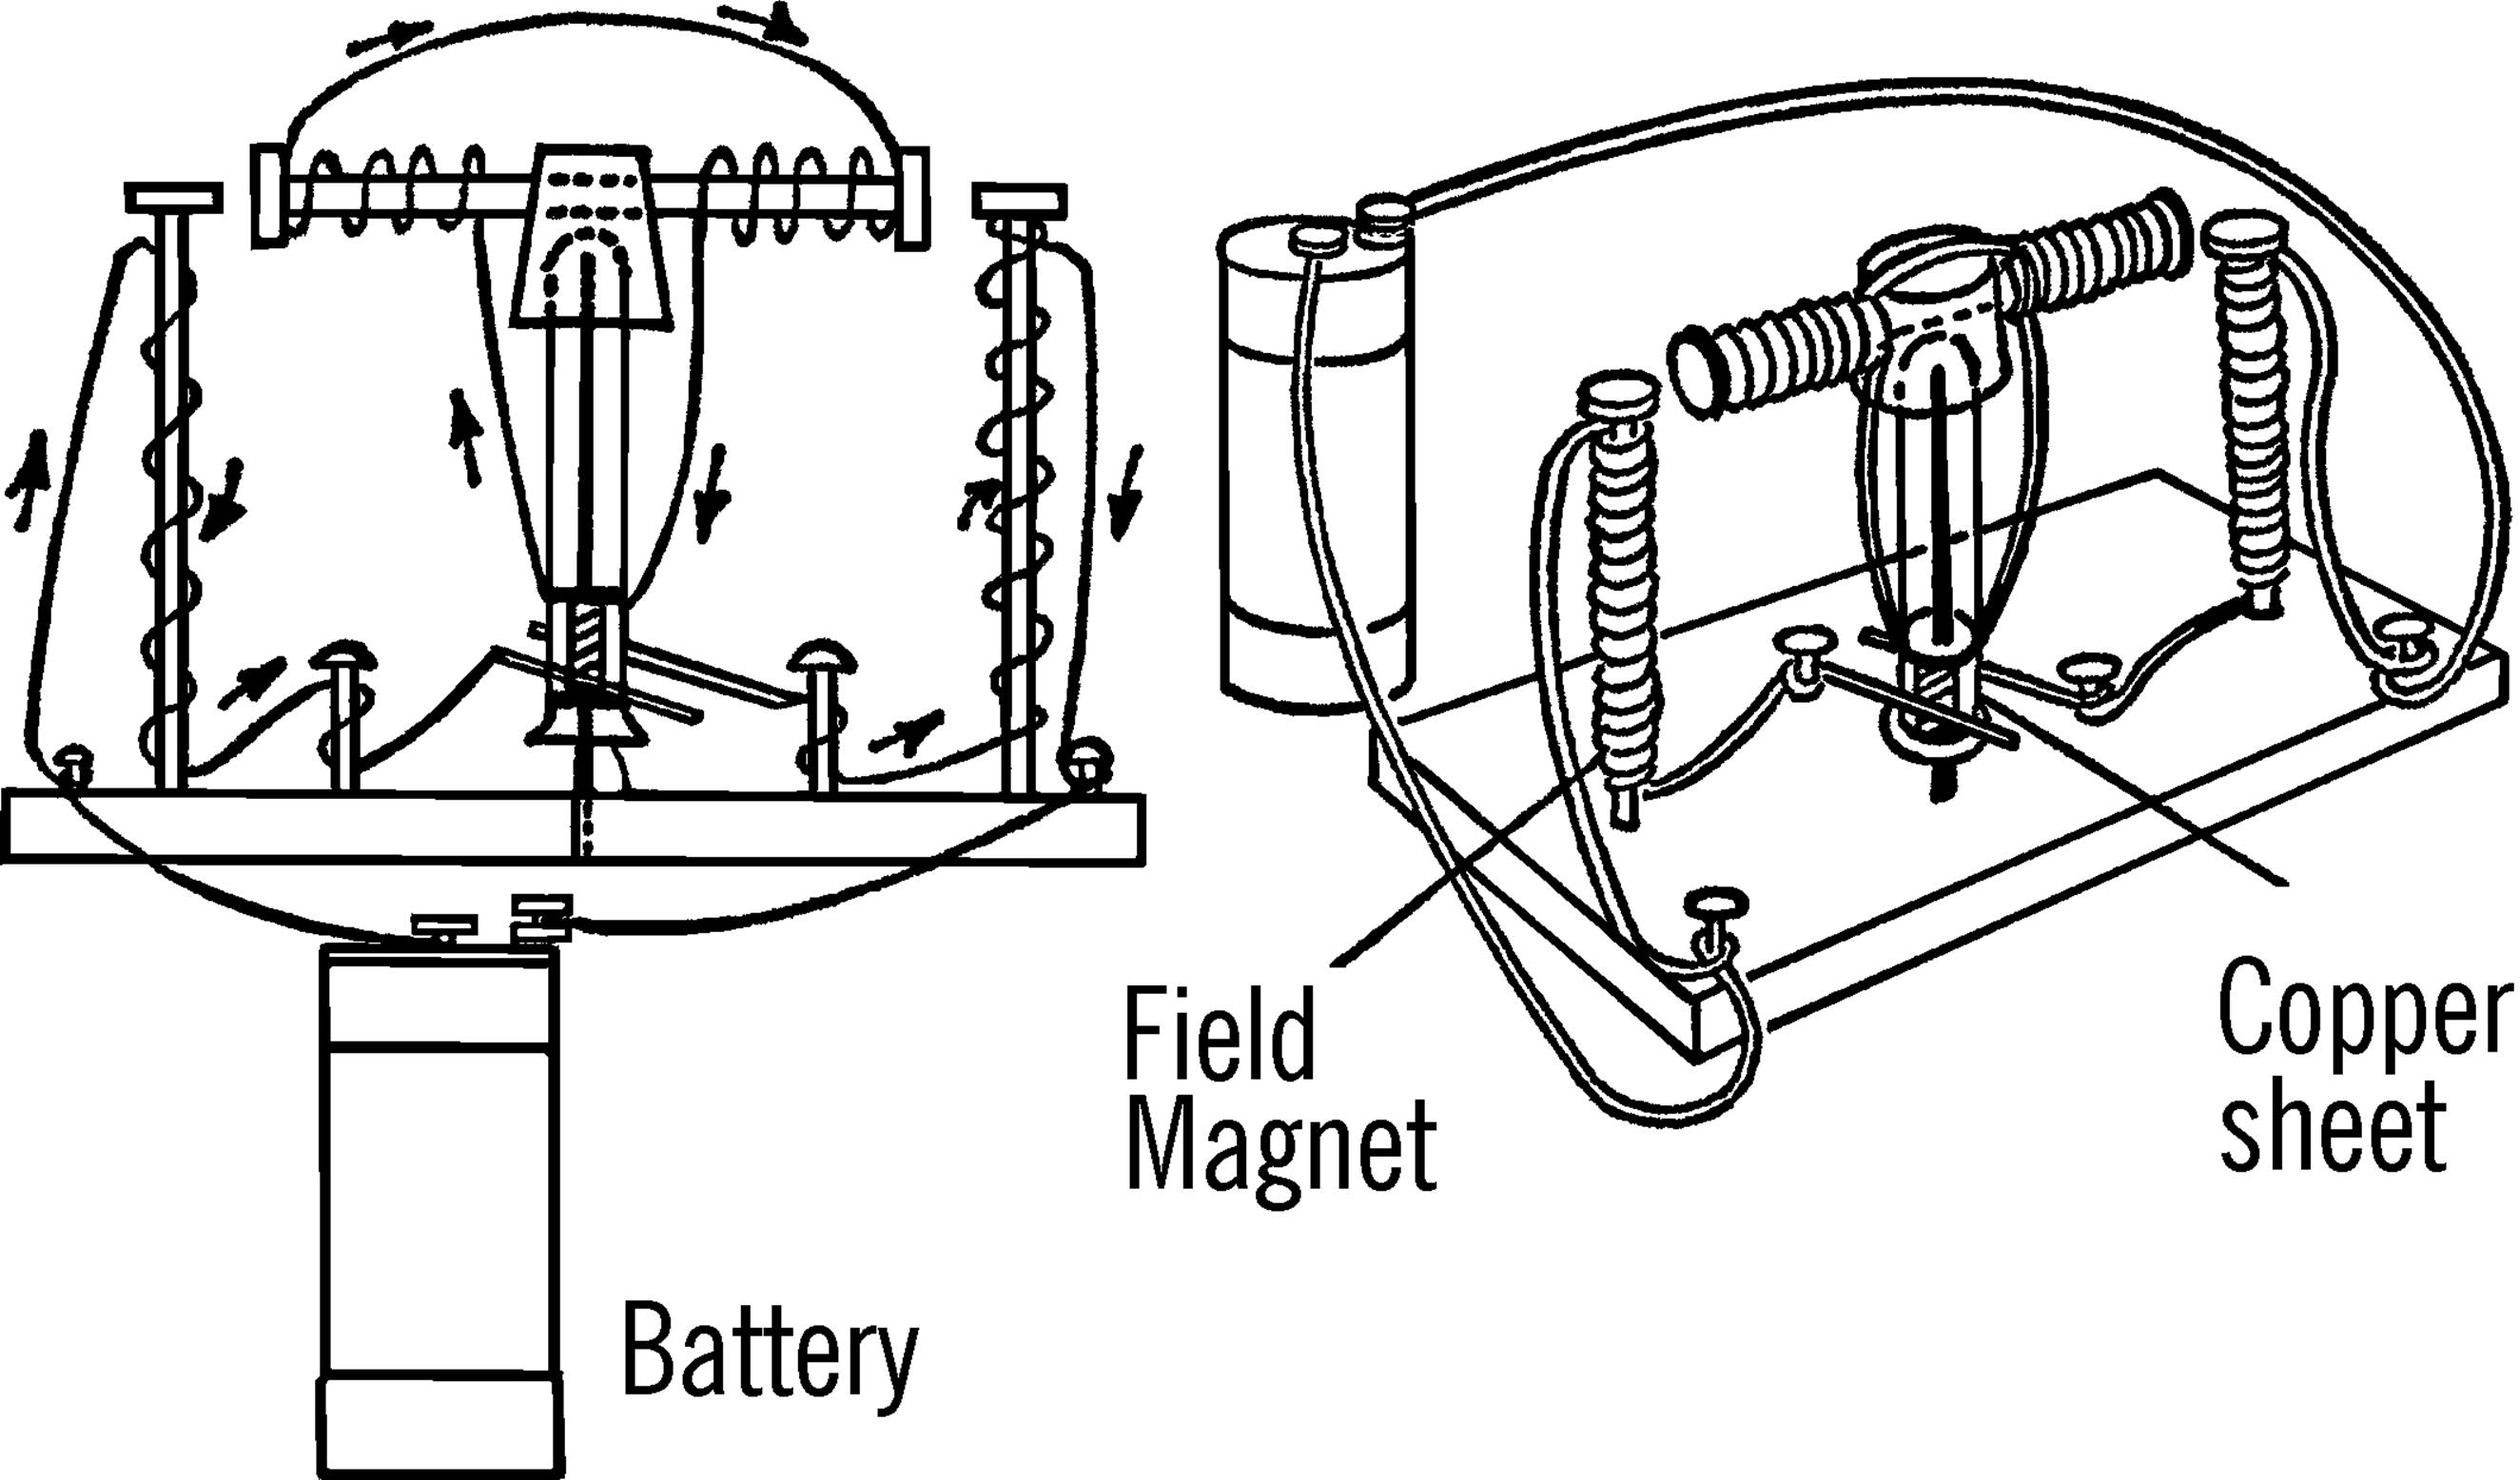 Test tube electric motor.